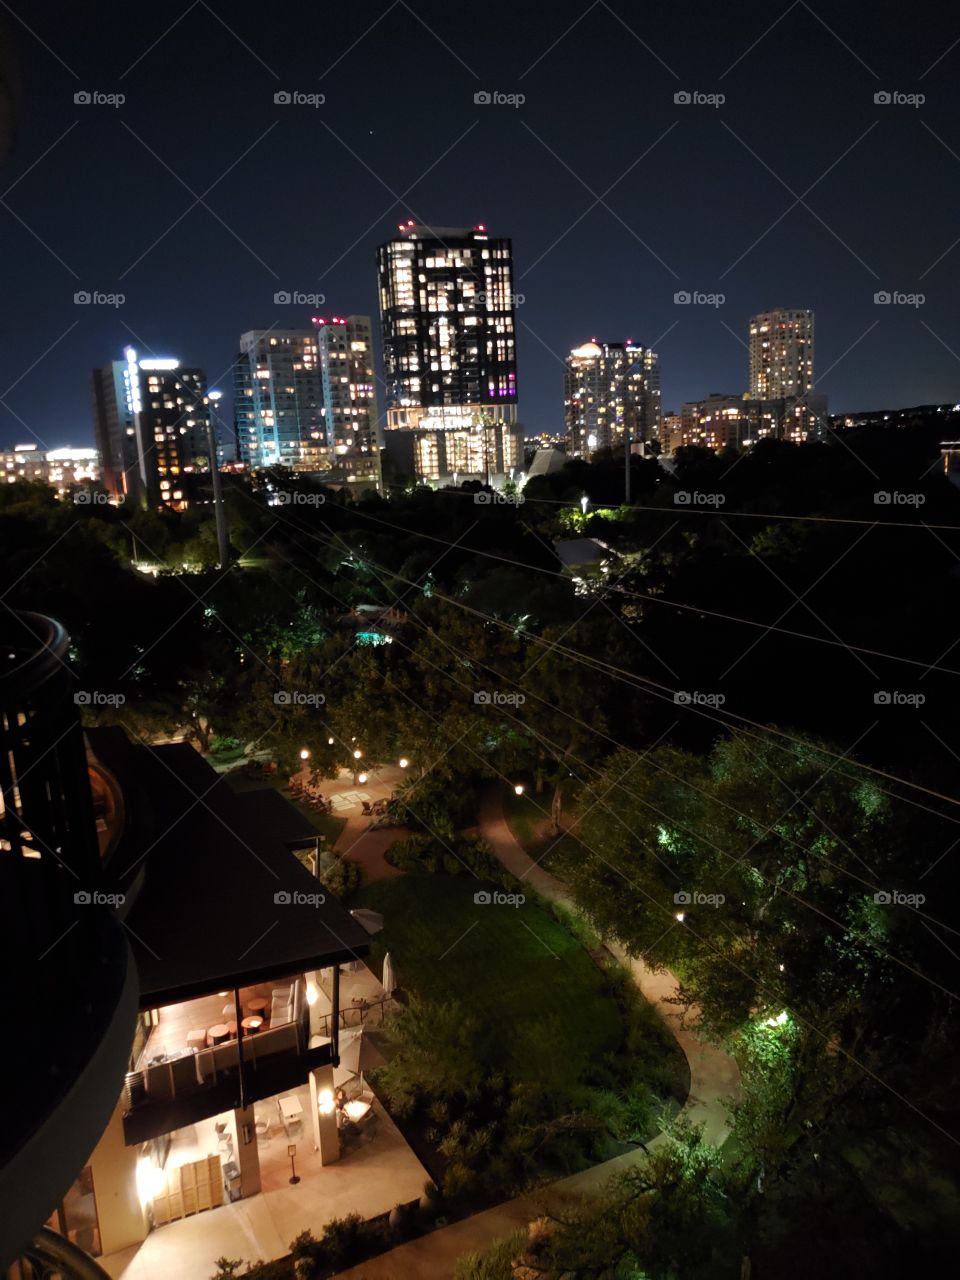 Austin, Texas at night